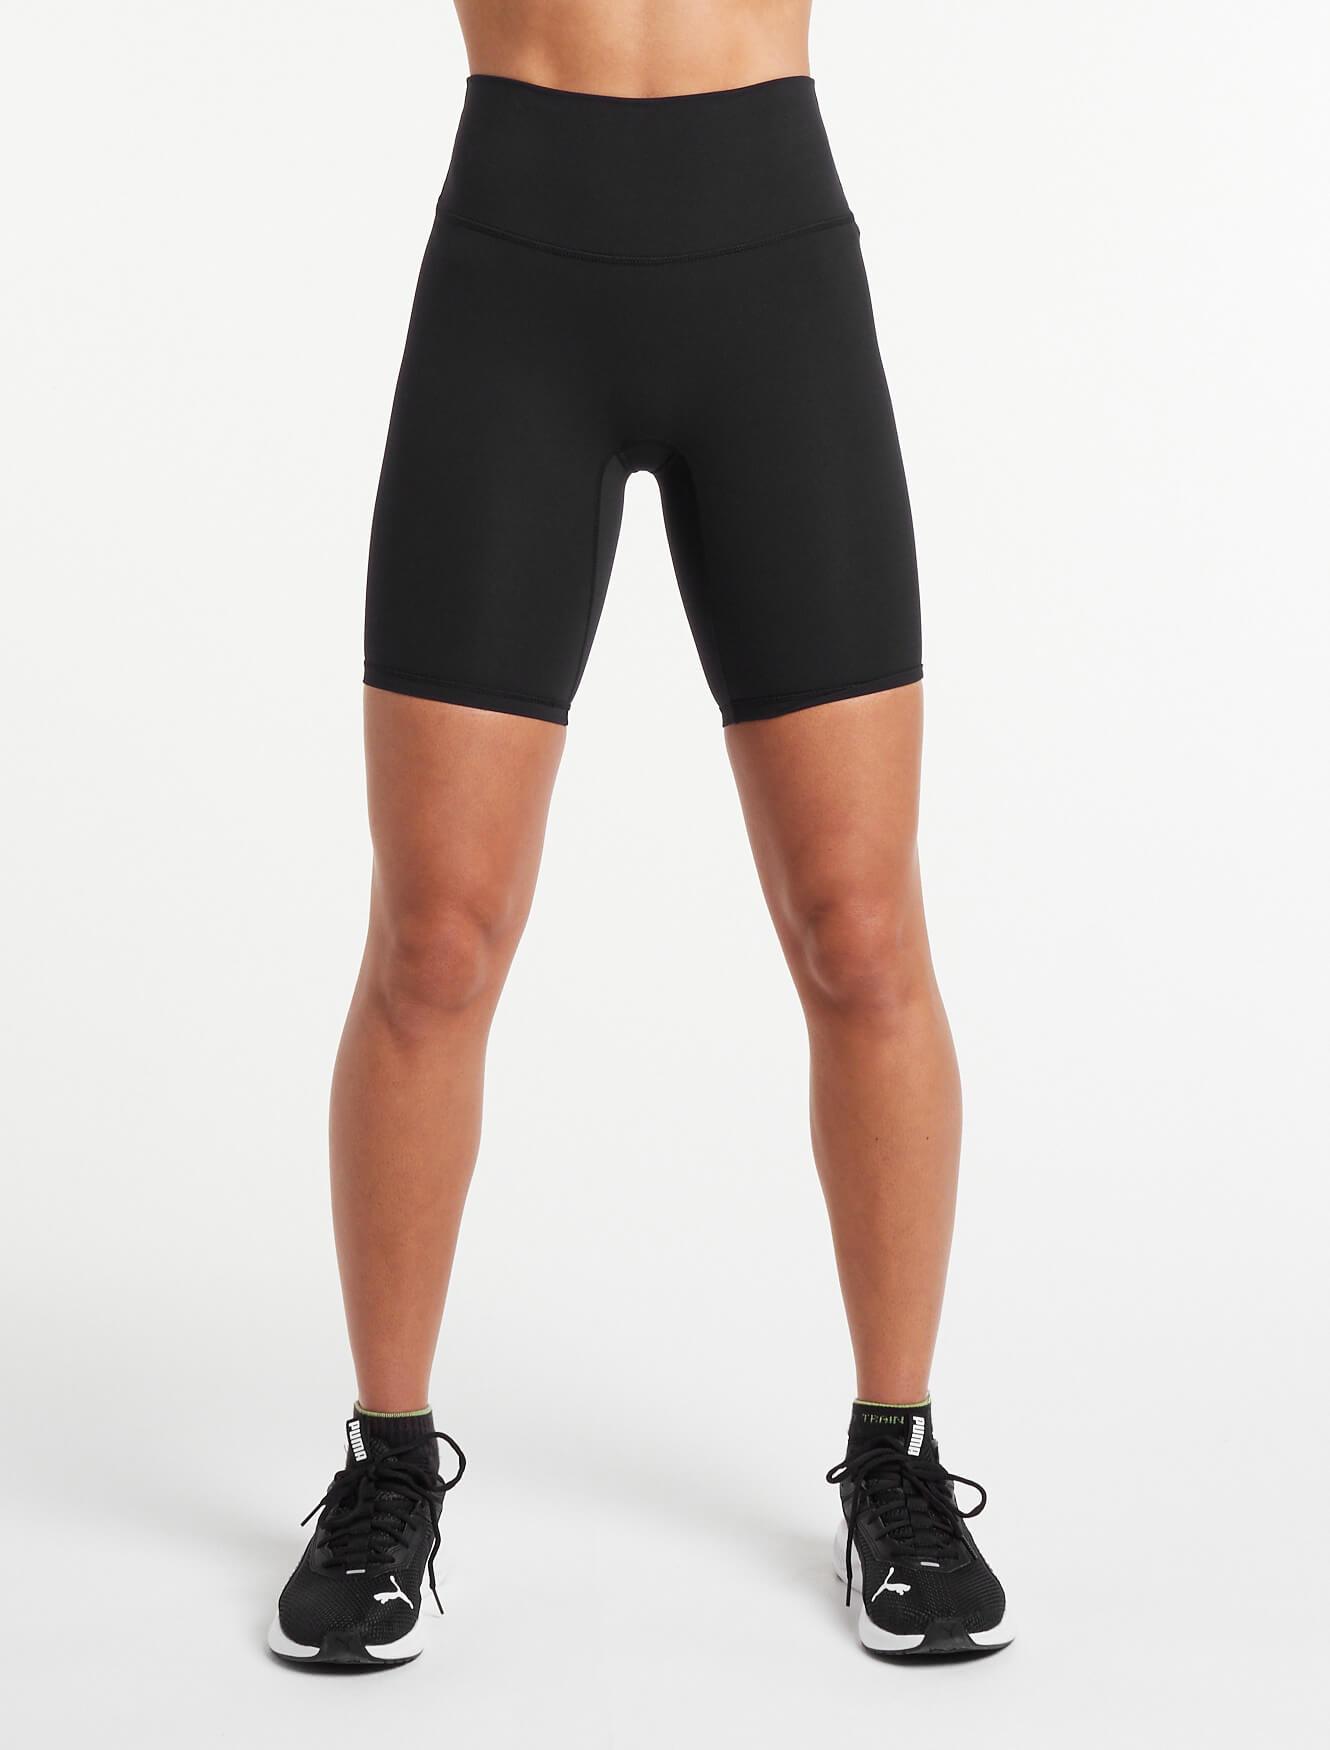 Pace Biker Shorts / Black Pursue Fitness 5